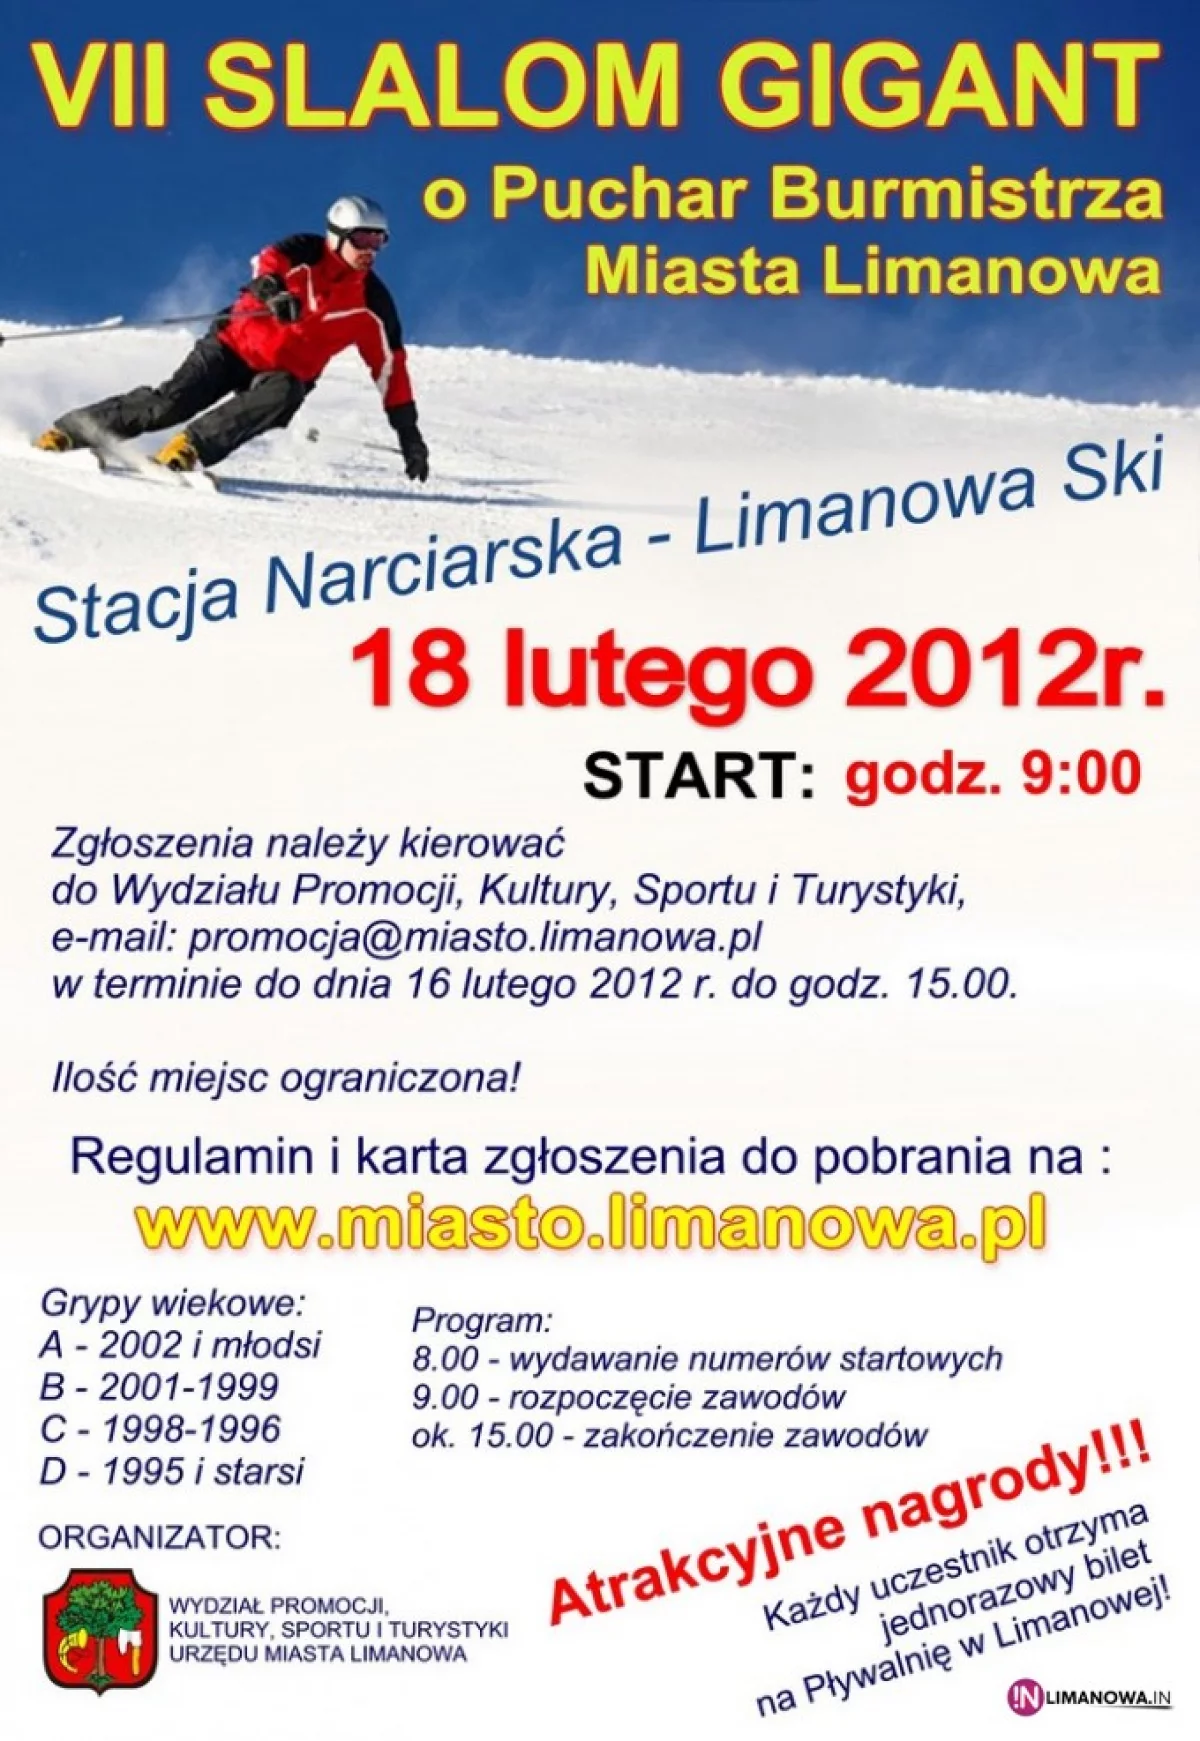 VII Slalom Gigant o Puchar Burmistrza Miasta Limanowa